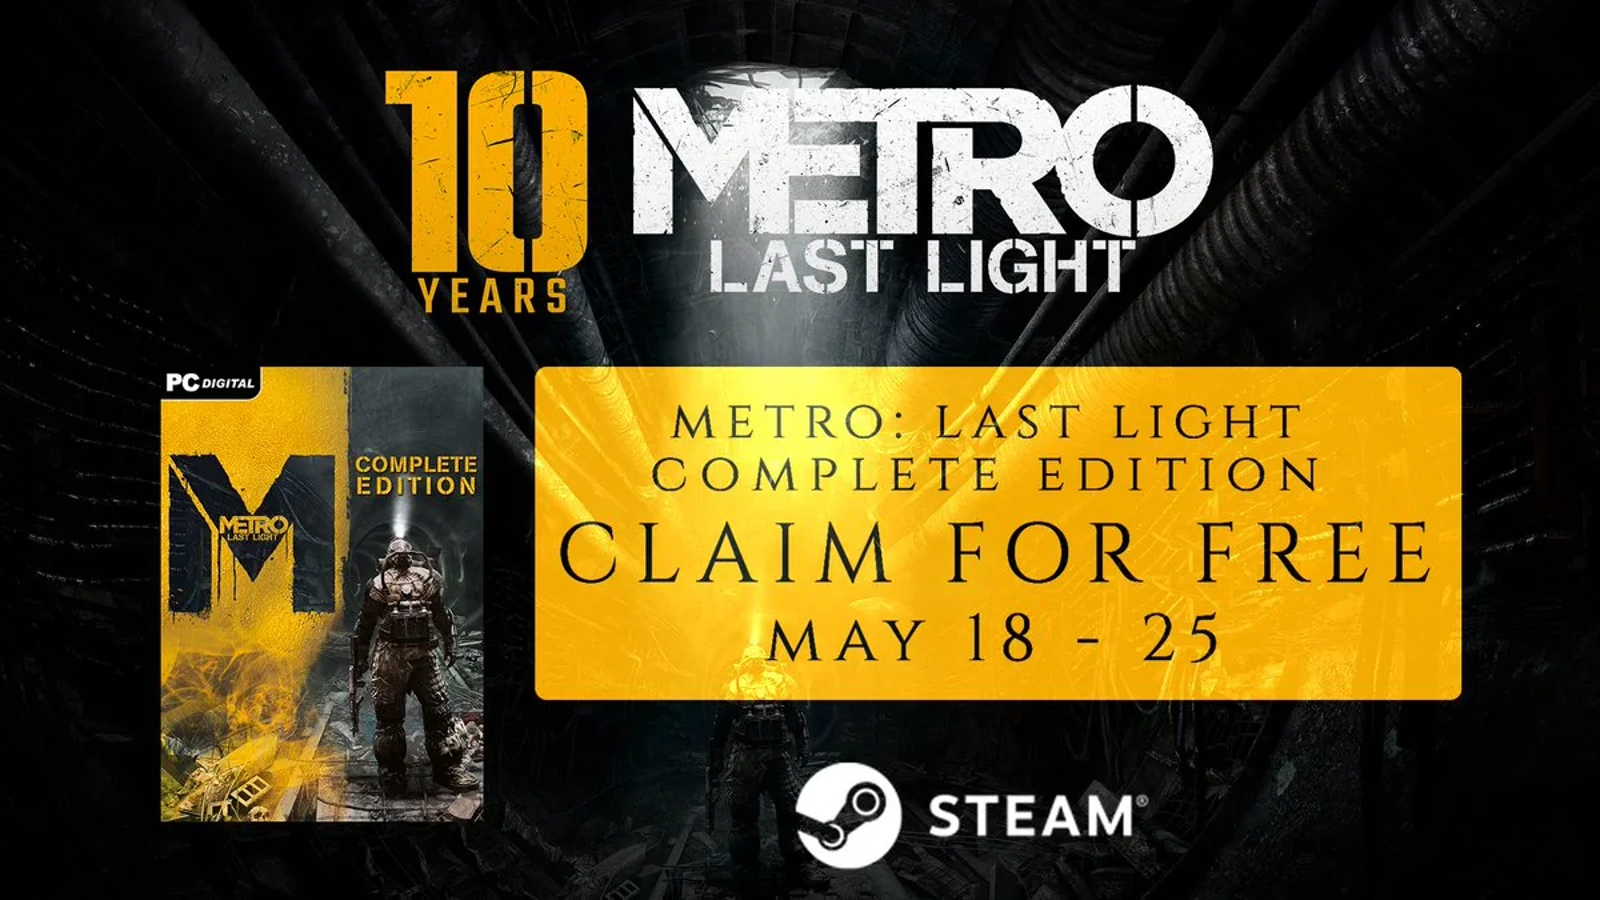 Metro: Last Light Redux está gratuito para PC